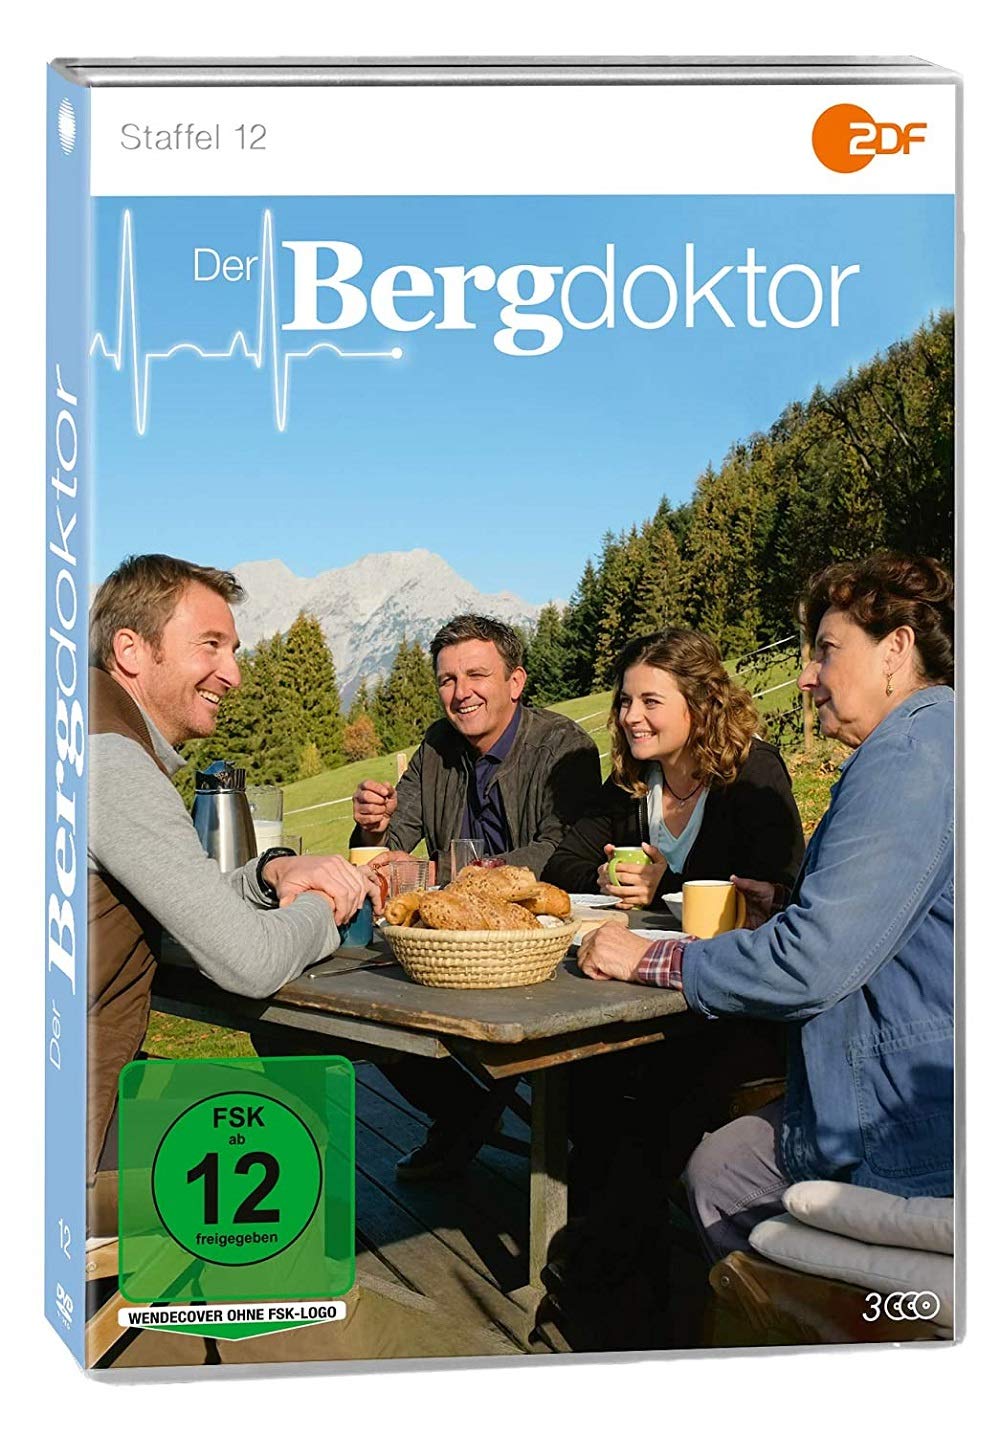 Der Bergdoktor Staffel 1-14 (1-10 Box und Staffel 11+12+13+14) Folgen 1-128